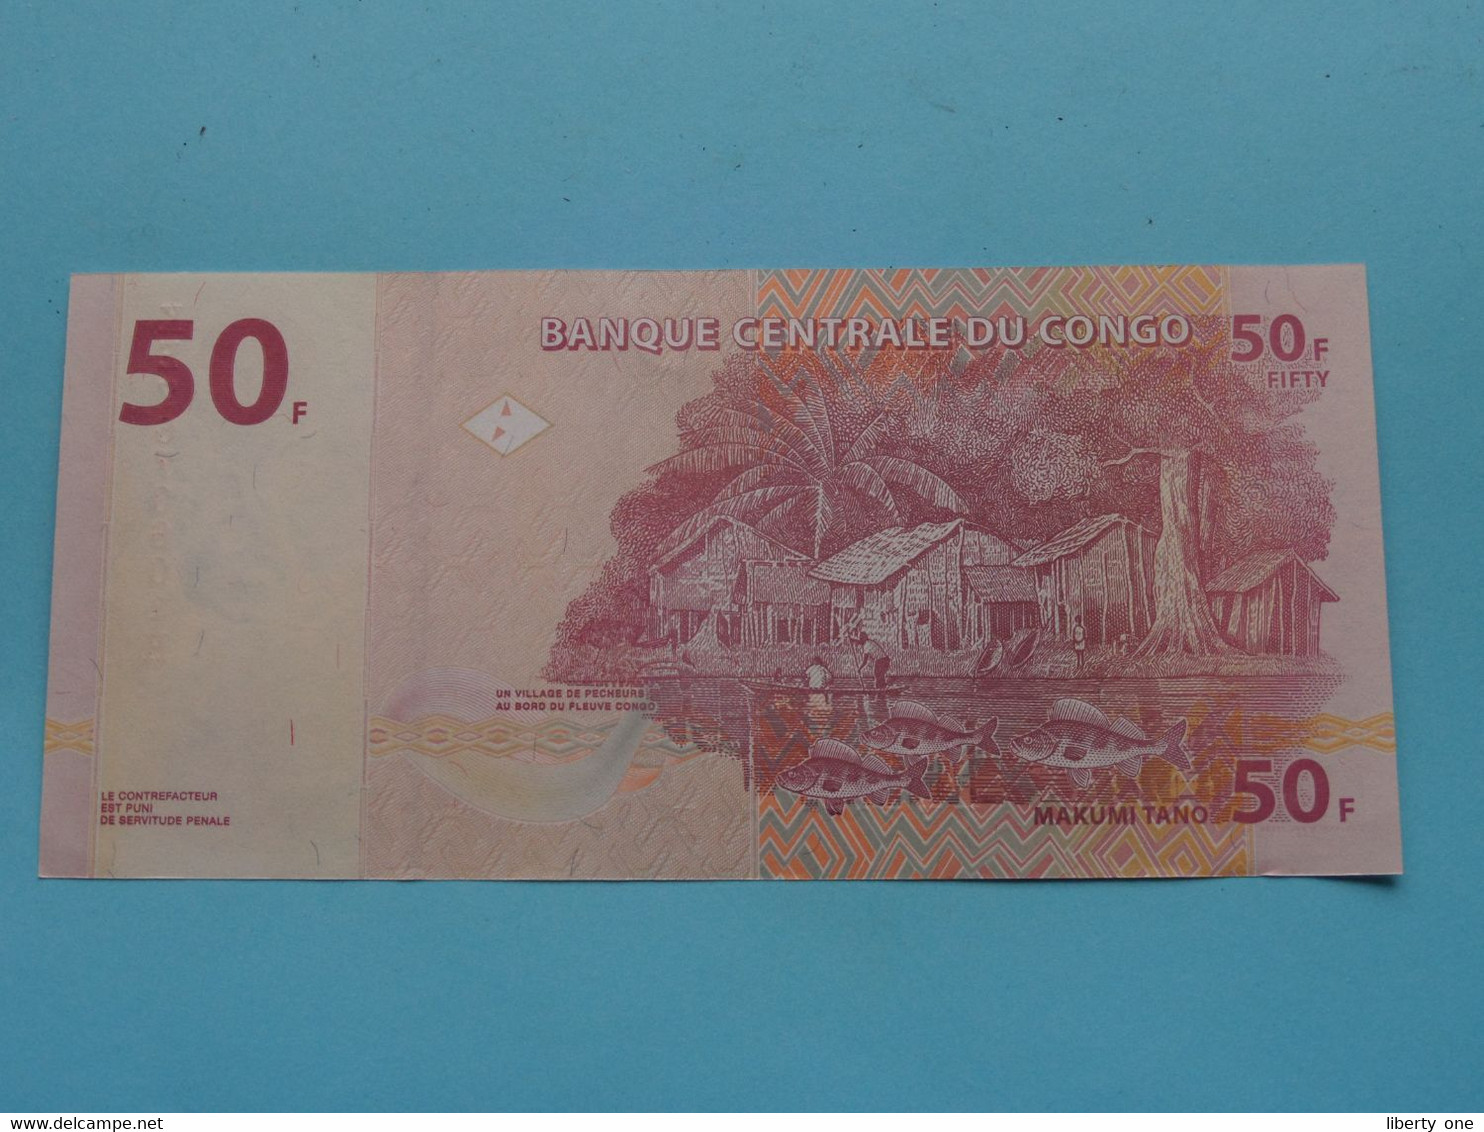 50 ( Cinquante ) Francs ( KE7670601H ) 2013 > Banque Centrale Du CONGO ( For Grade, Please See Photo ) UNC ! - Republic Of Congo (Congo-Brazzaville)